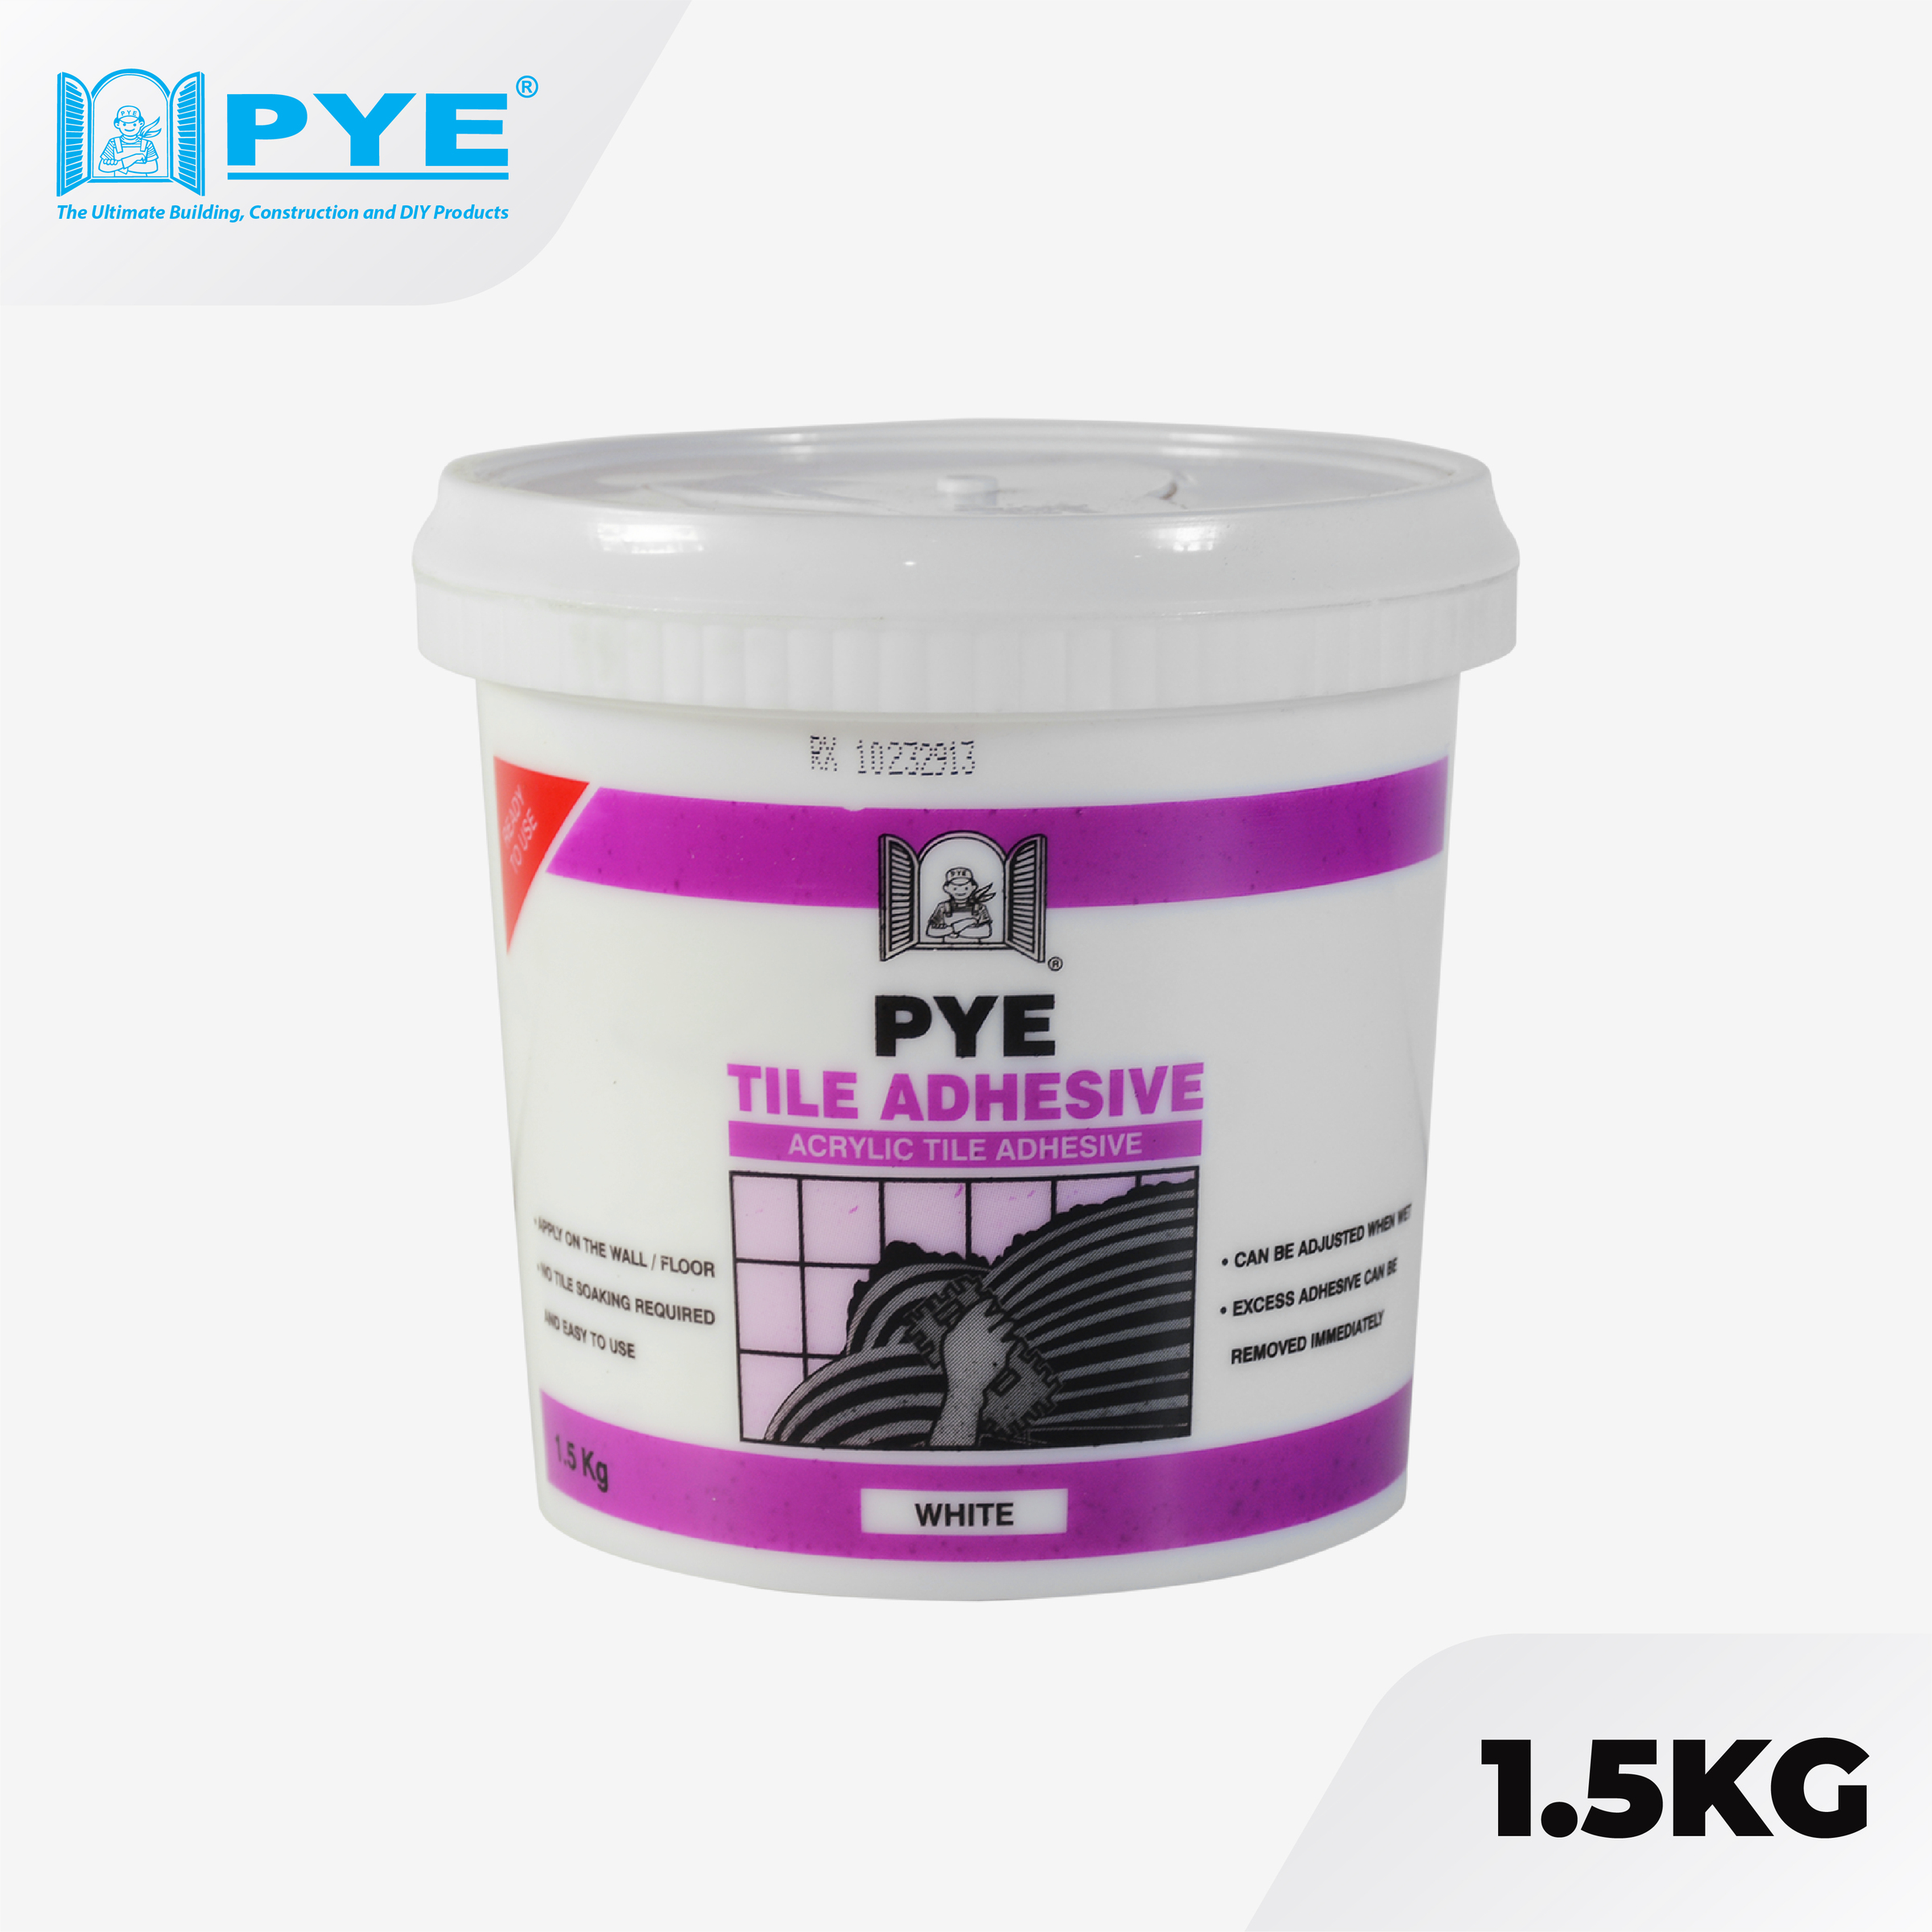 PYE Tile Adhesive 1.5kg